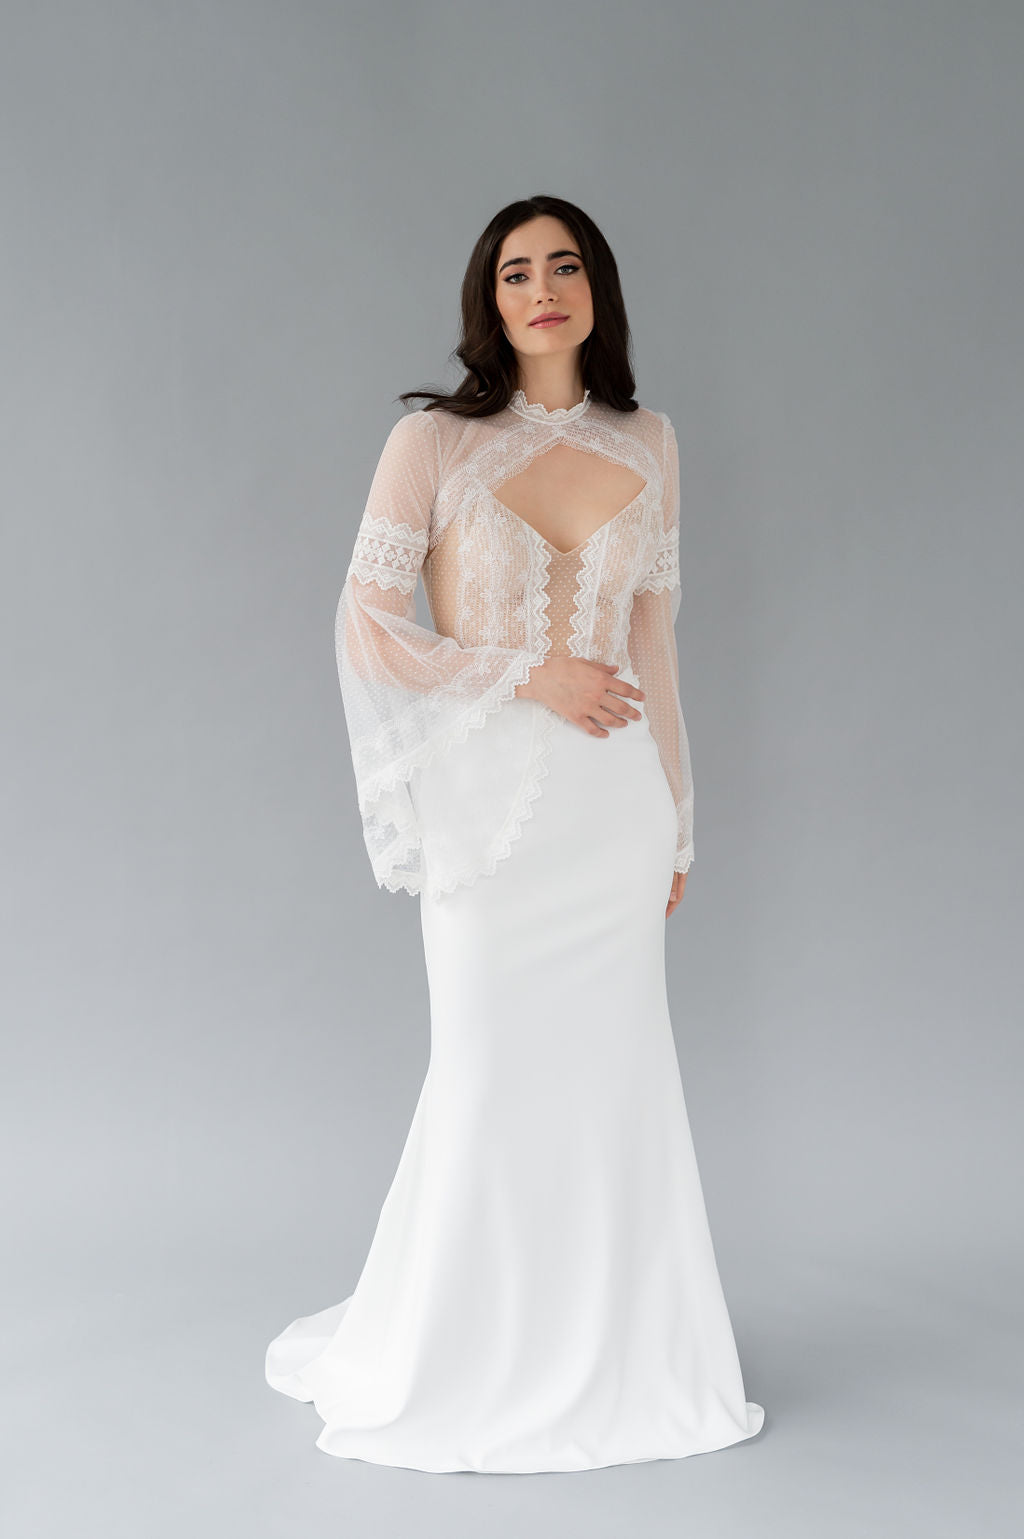 Romantic boho inspired wedding dress by Catherine Langlois. Custom made in Toronto, Canada.